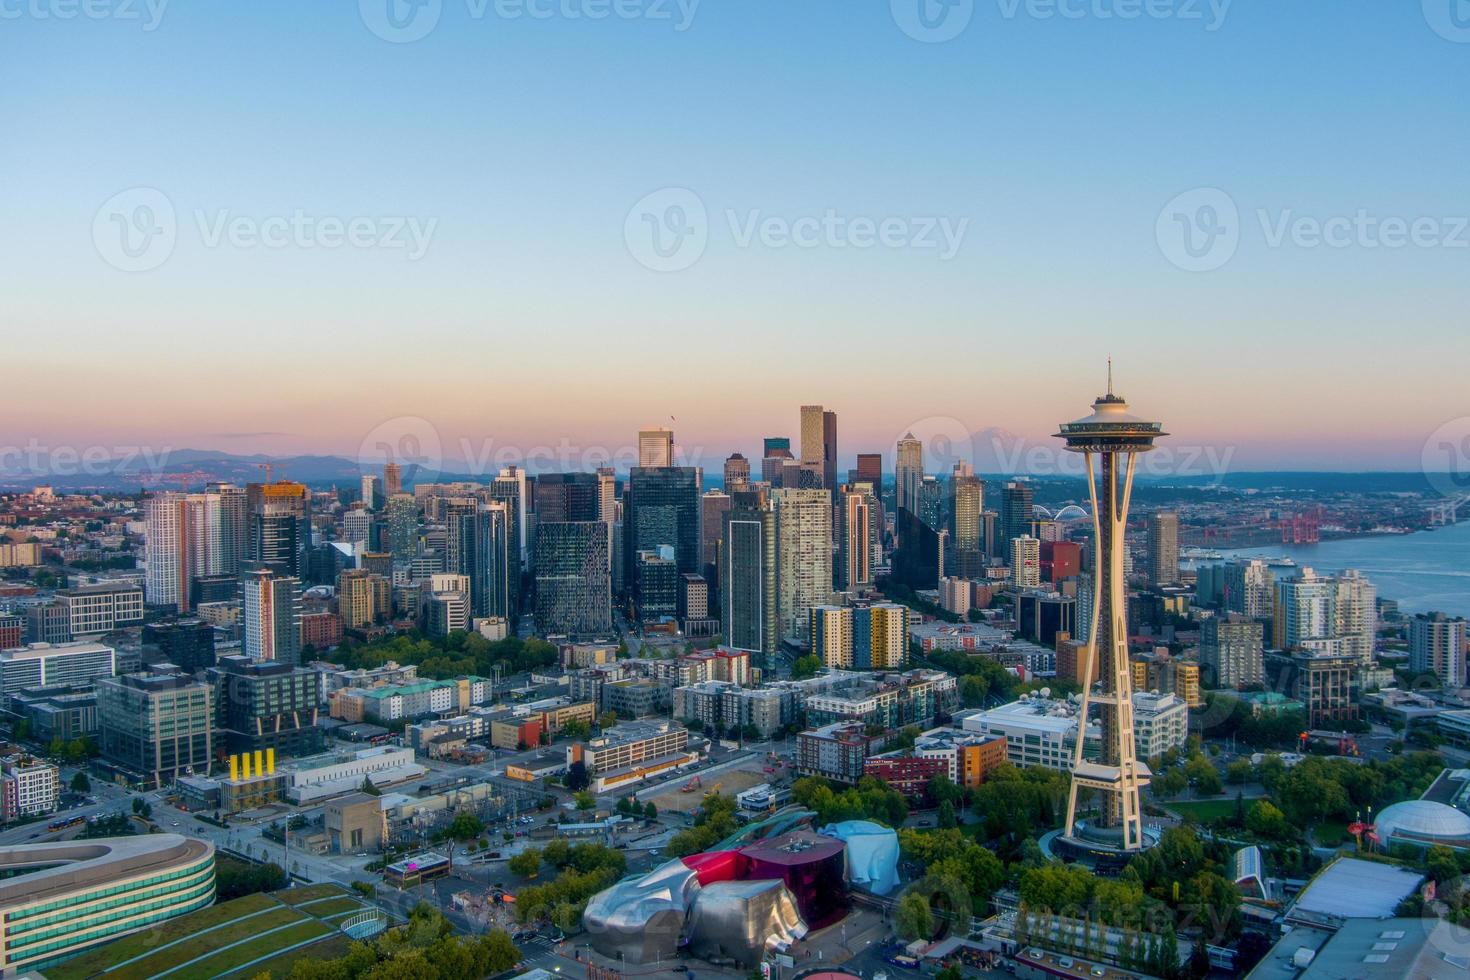 Seattle, Washington ao pôr do sol em agosto foto